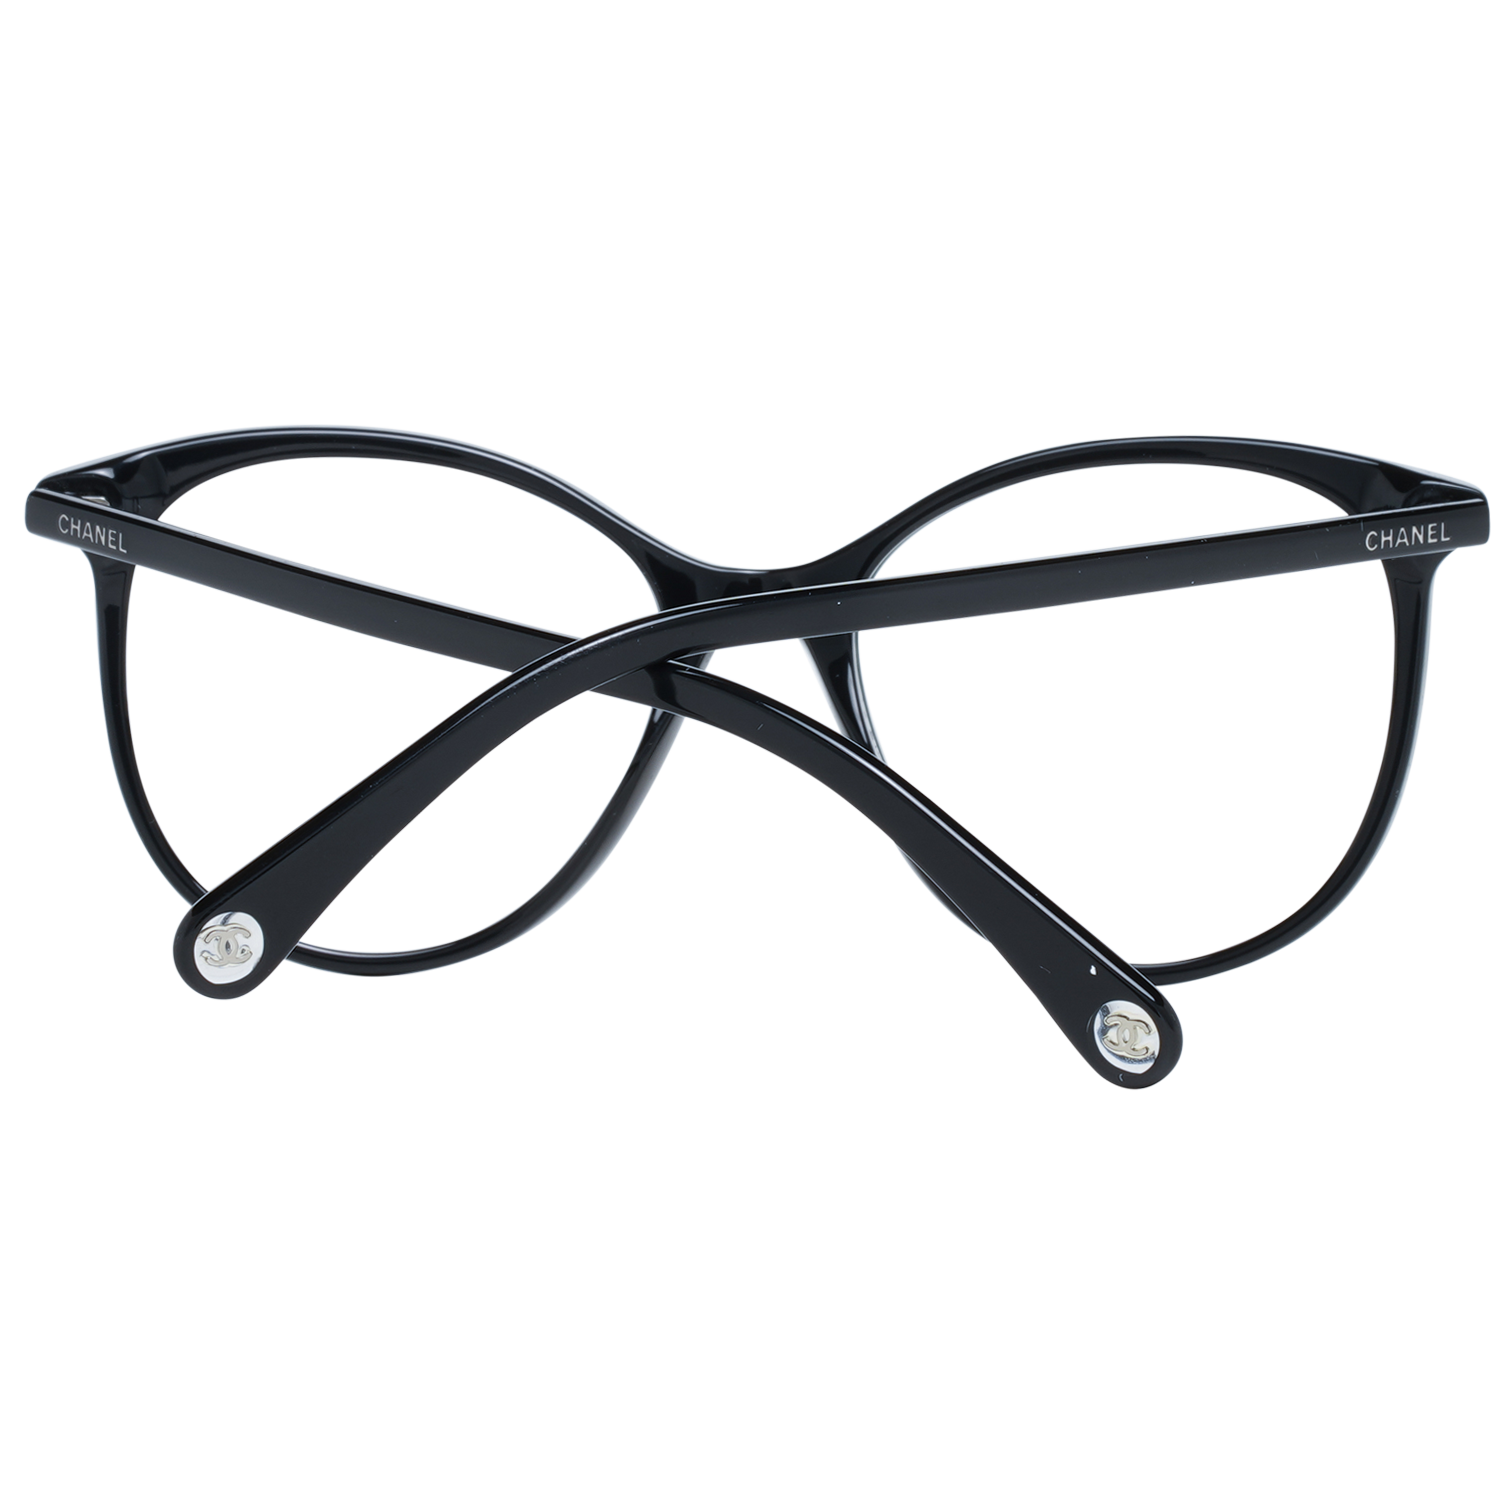 Chanel Frames Chanel Glasses Frames 0CH3412 C501 51mm Eyeglasses Eyewear UK USA Australia 